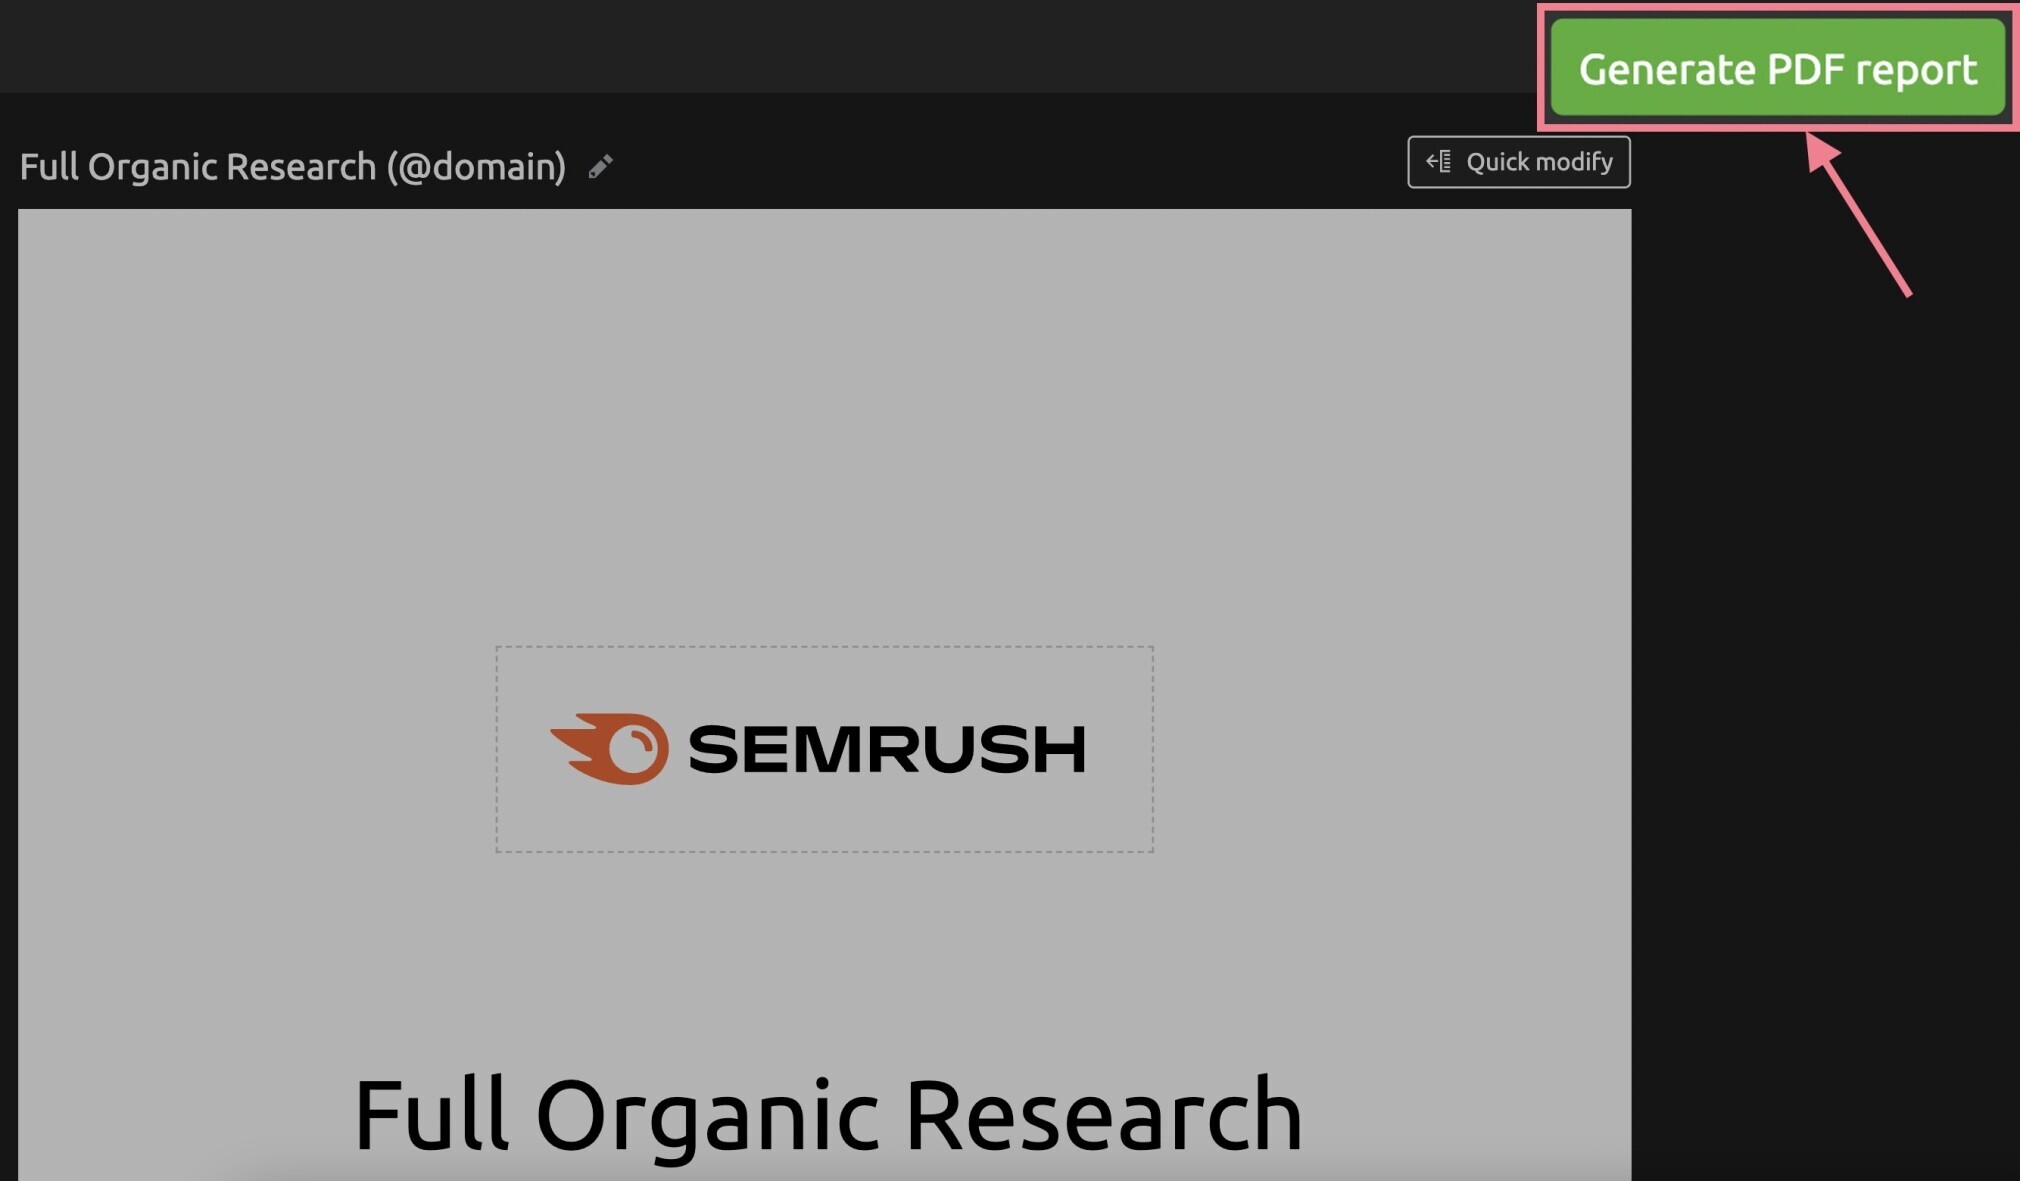 generate pdf full organic research report